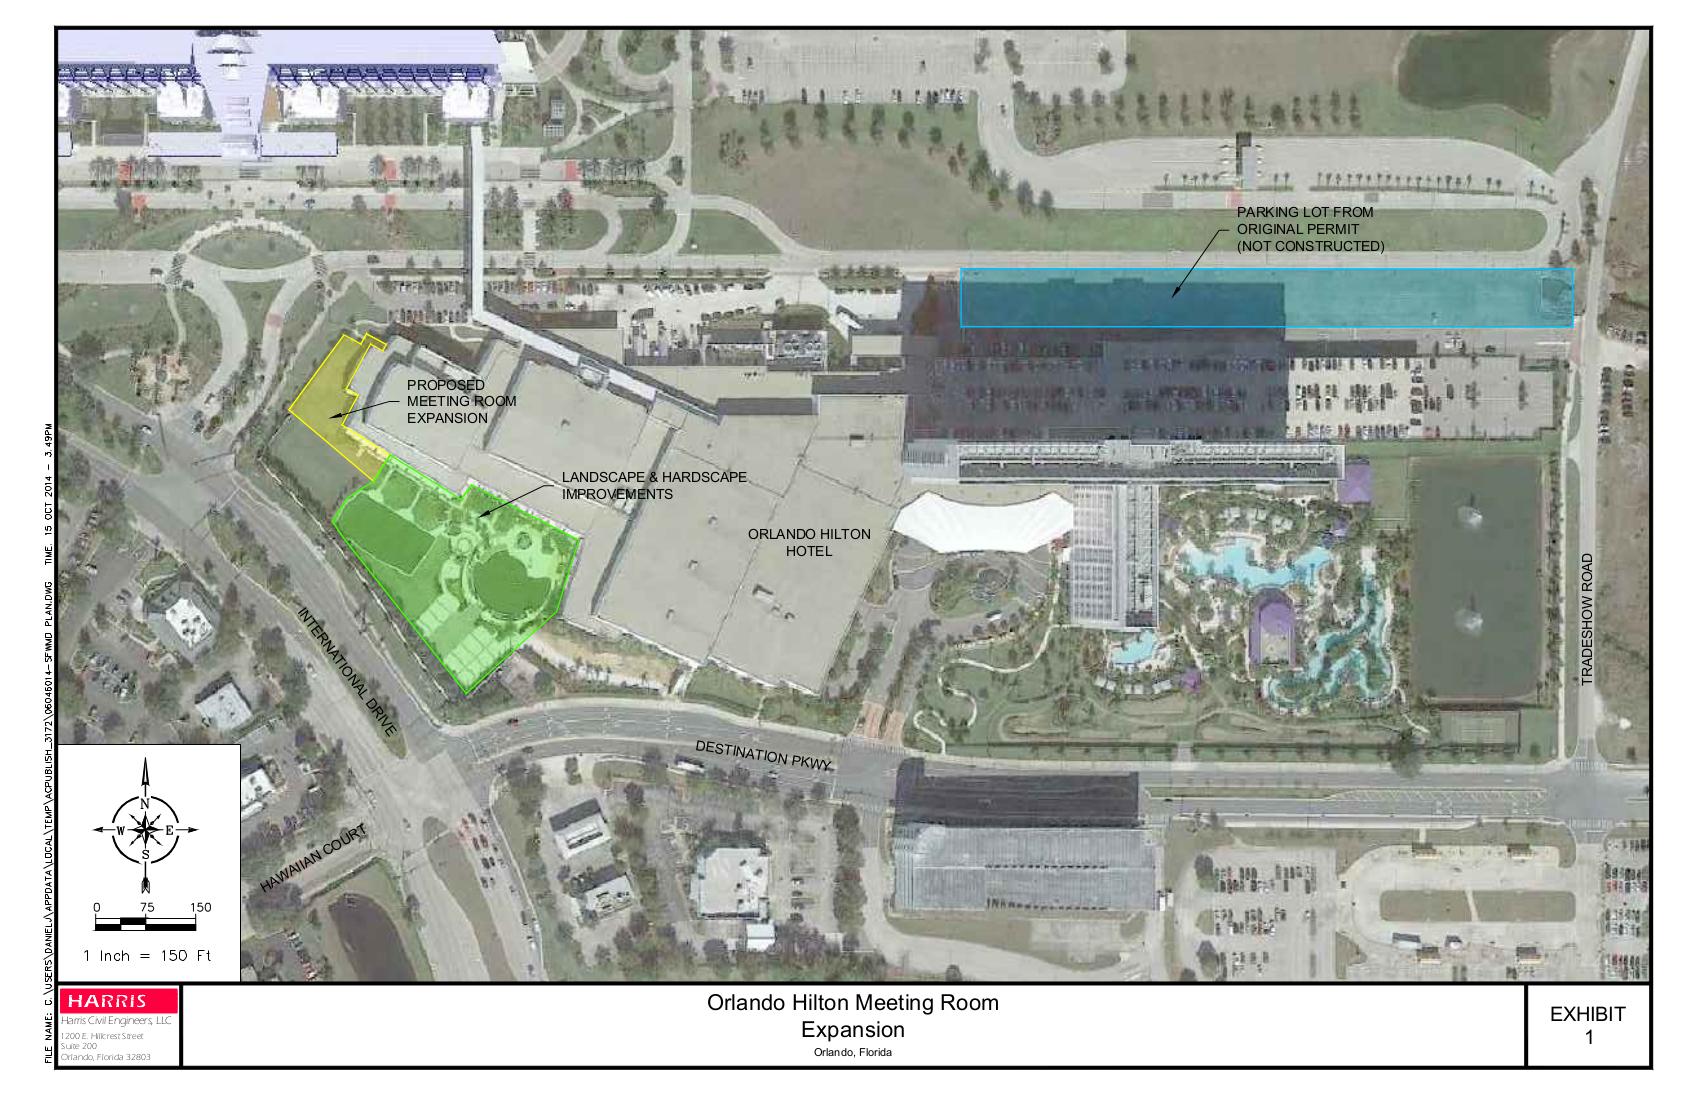 Hilton Orlando to undergo meeting room expansion - Orlando Business Journal